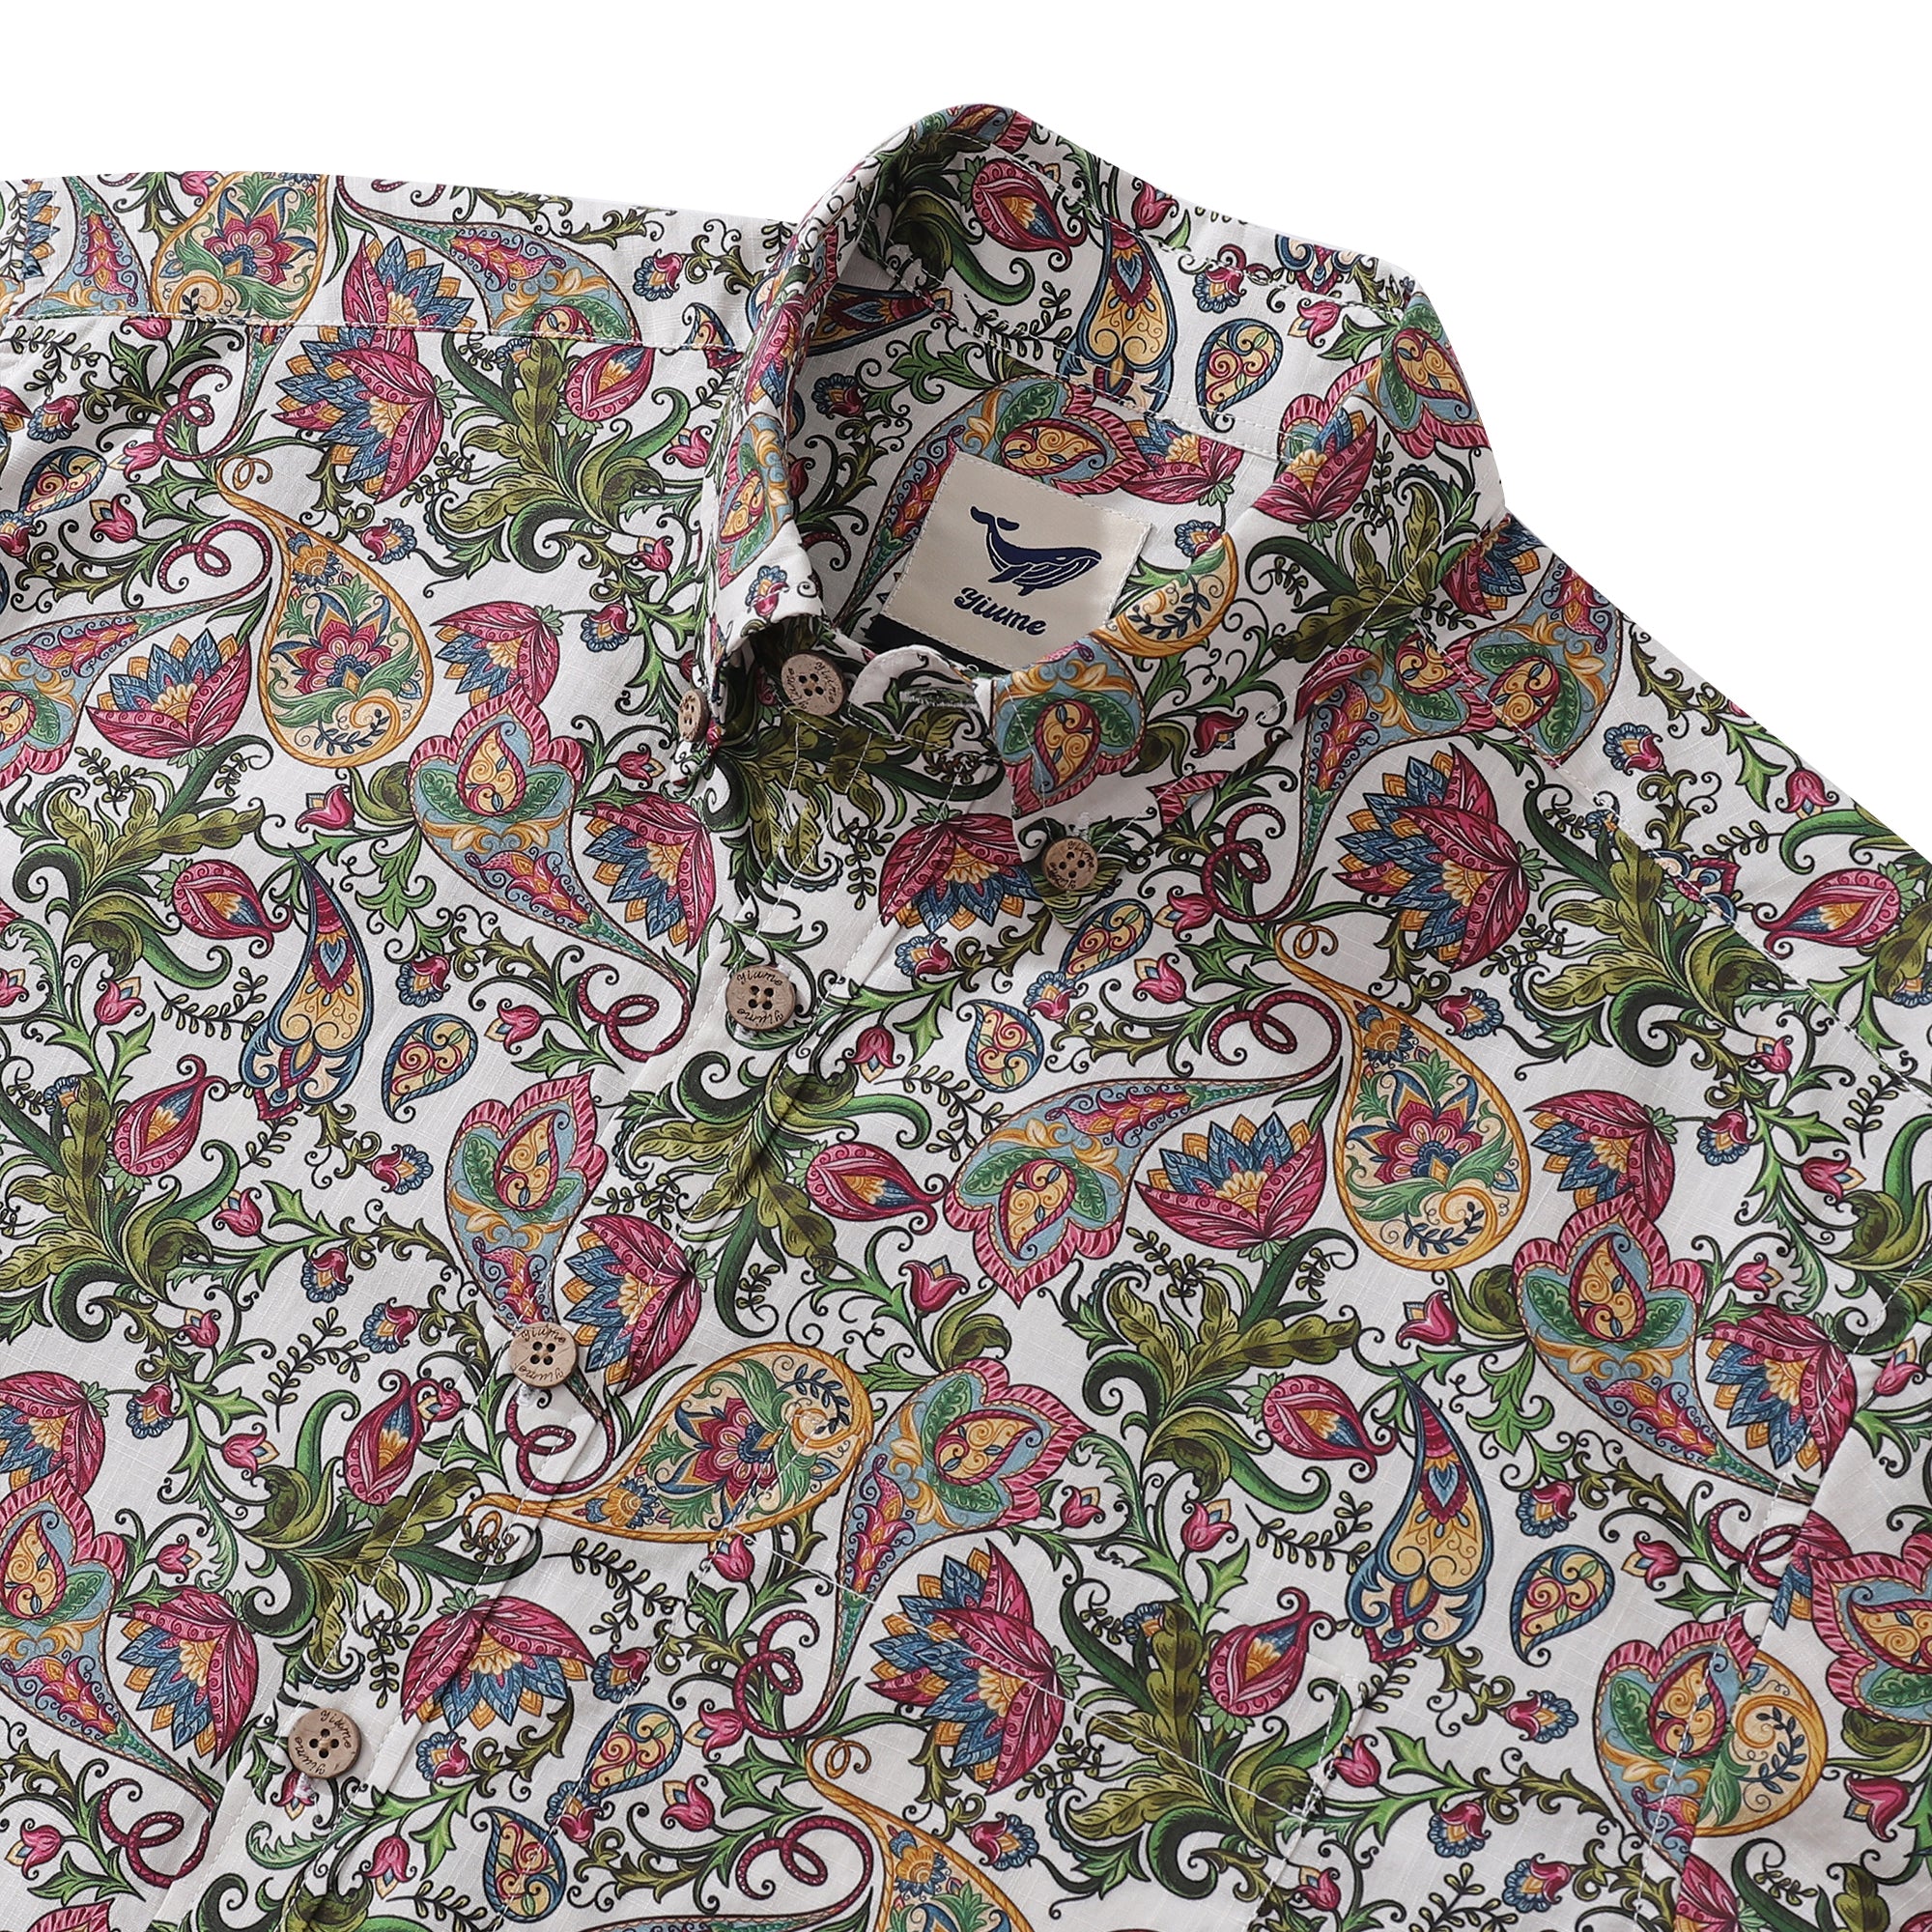 Hawaiian Shirt For Men Sophisticated Botanical Romance Button-down Shirt Short Sleeve 100% Cotton Shirt